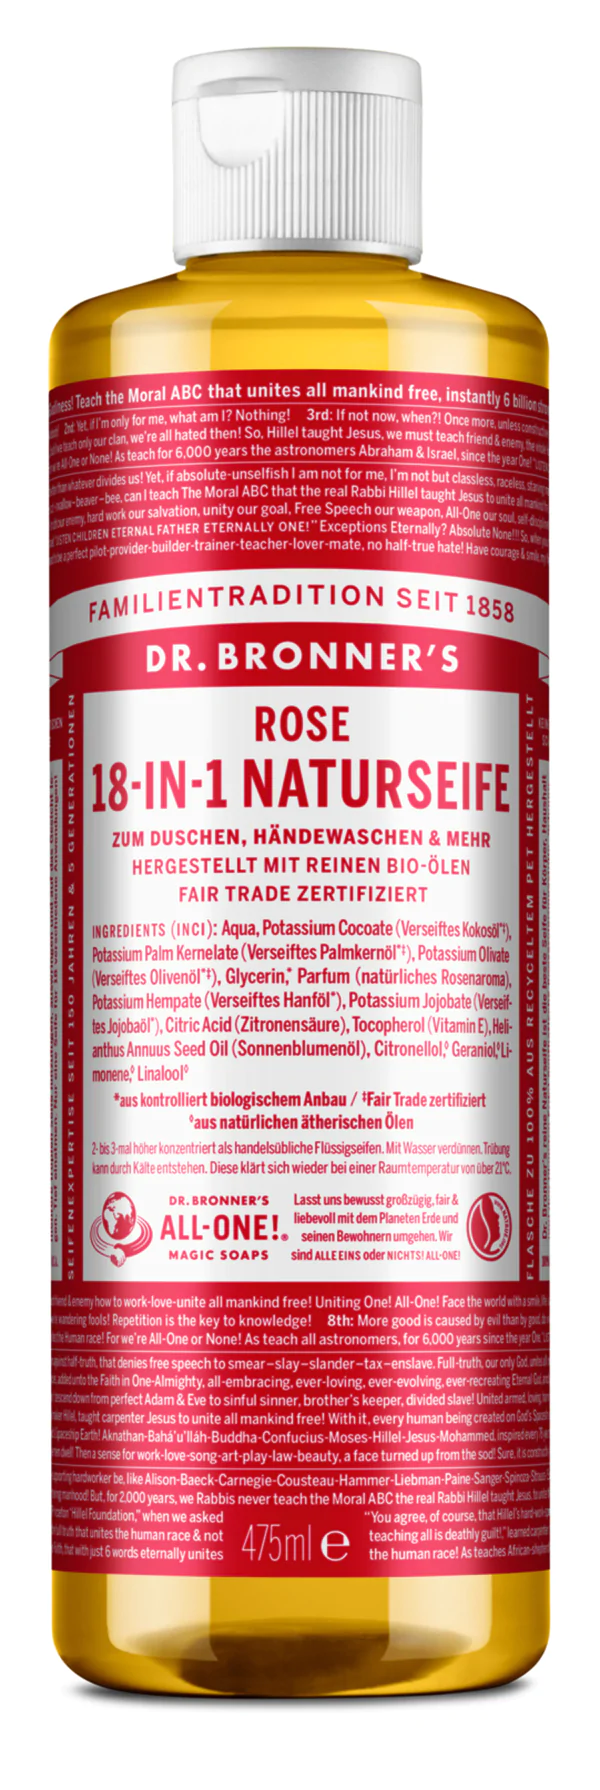 Dr Bronner 18-IN-1 NATURSEIFE Rose 475ml